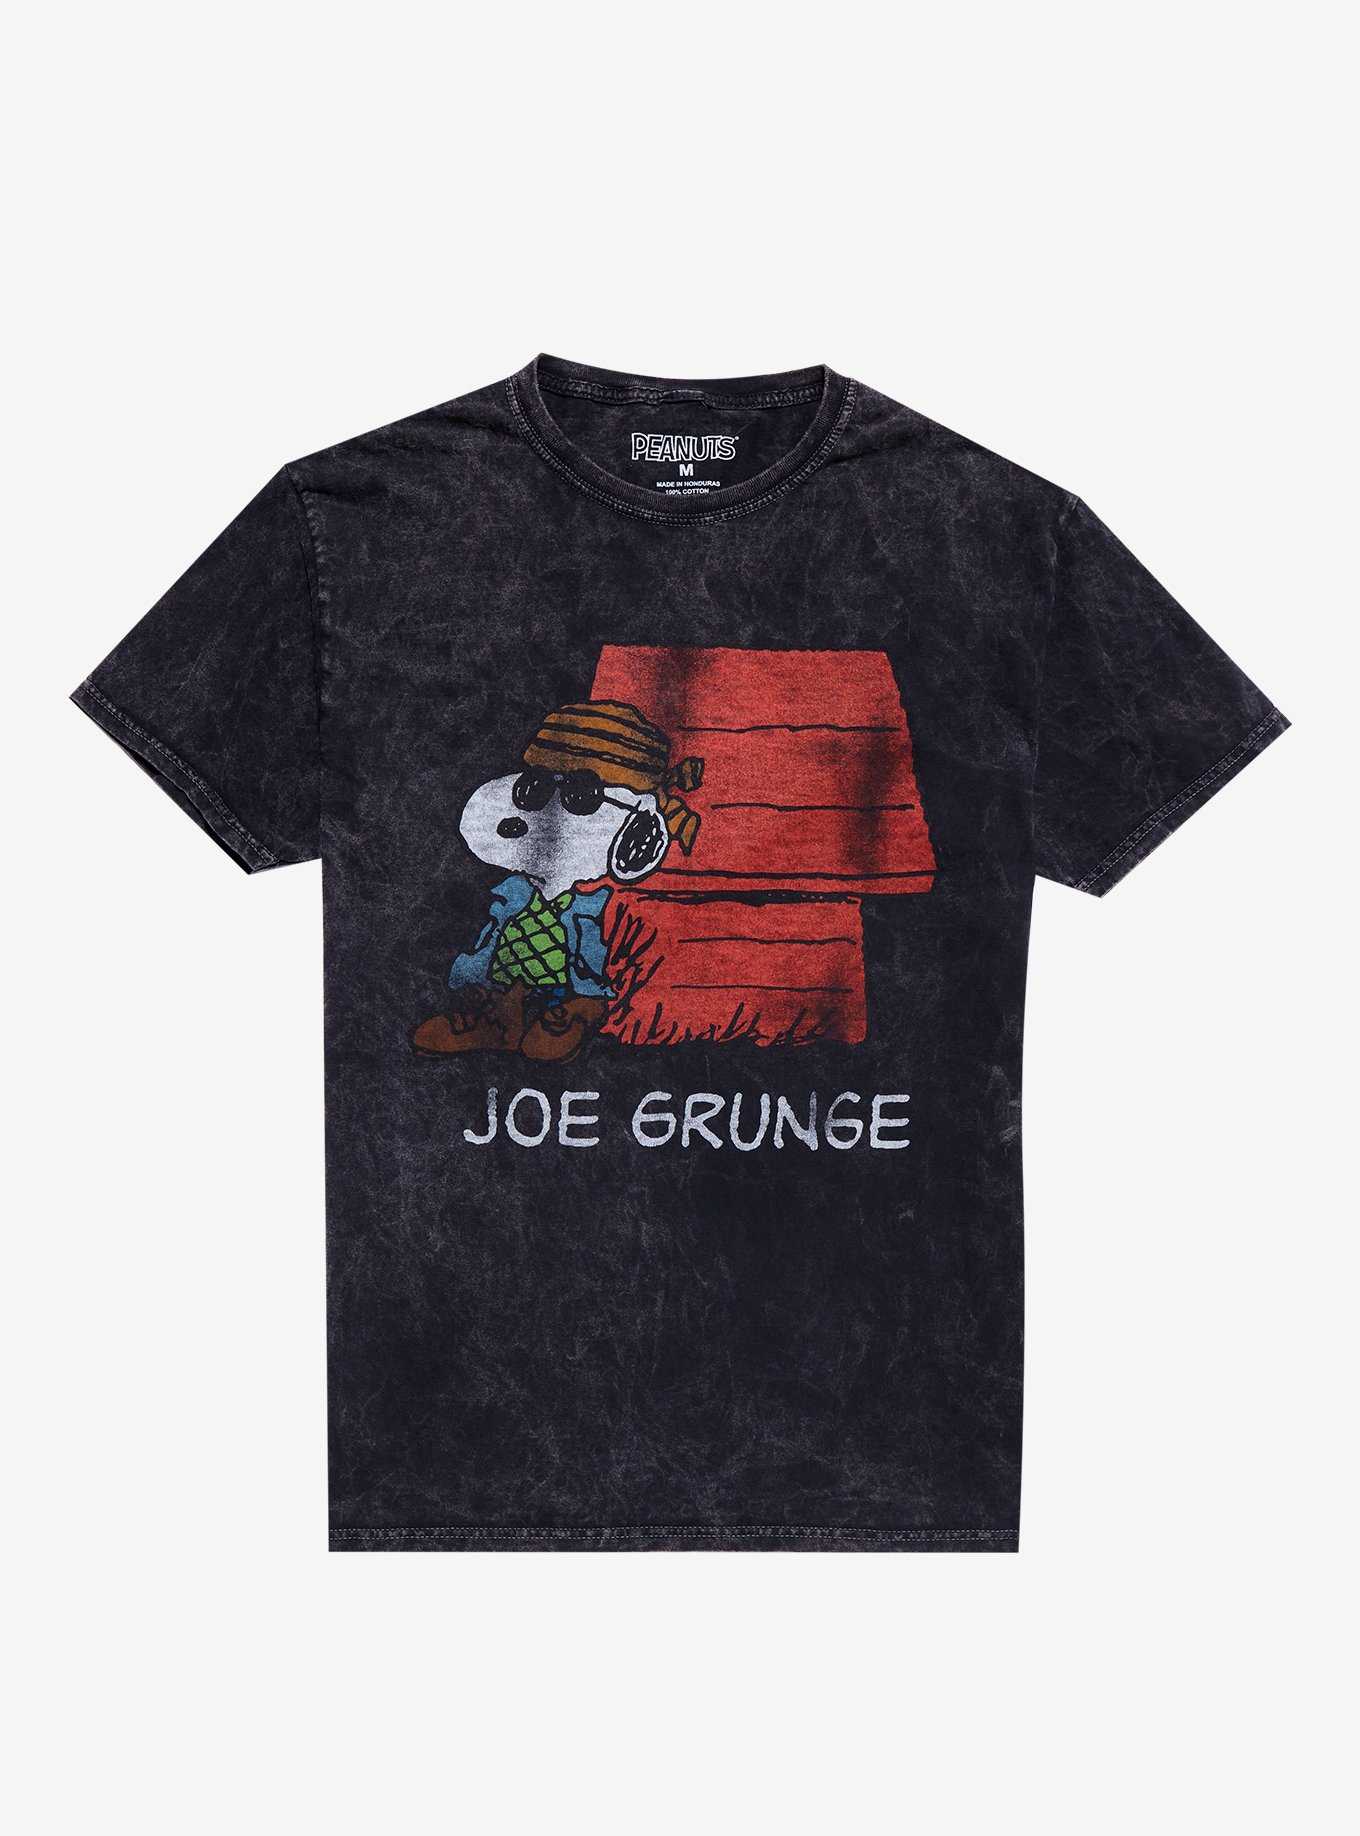 Peanuts Joe Grunge Vintage Dark Wash T-Shirt, , hi-res